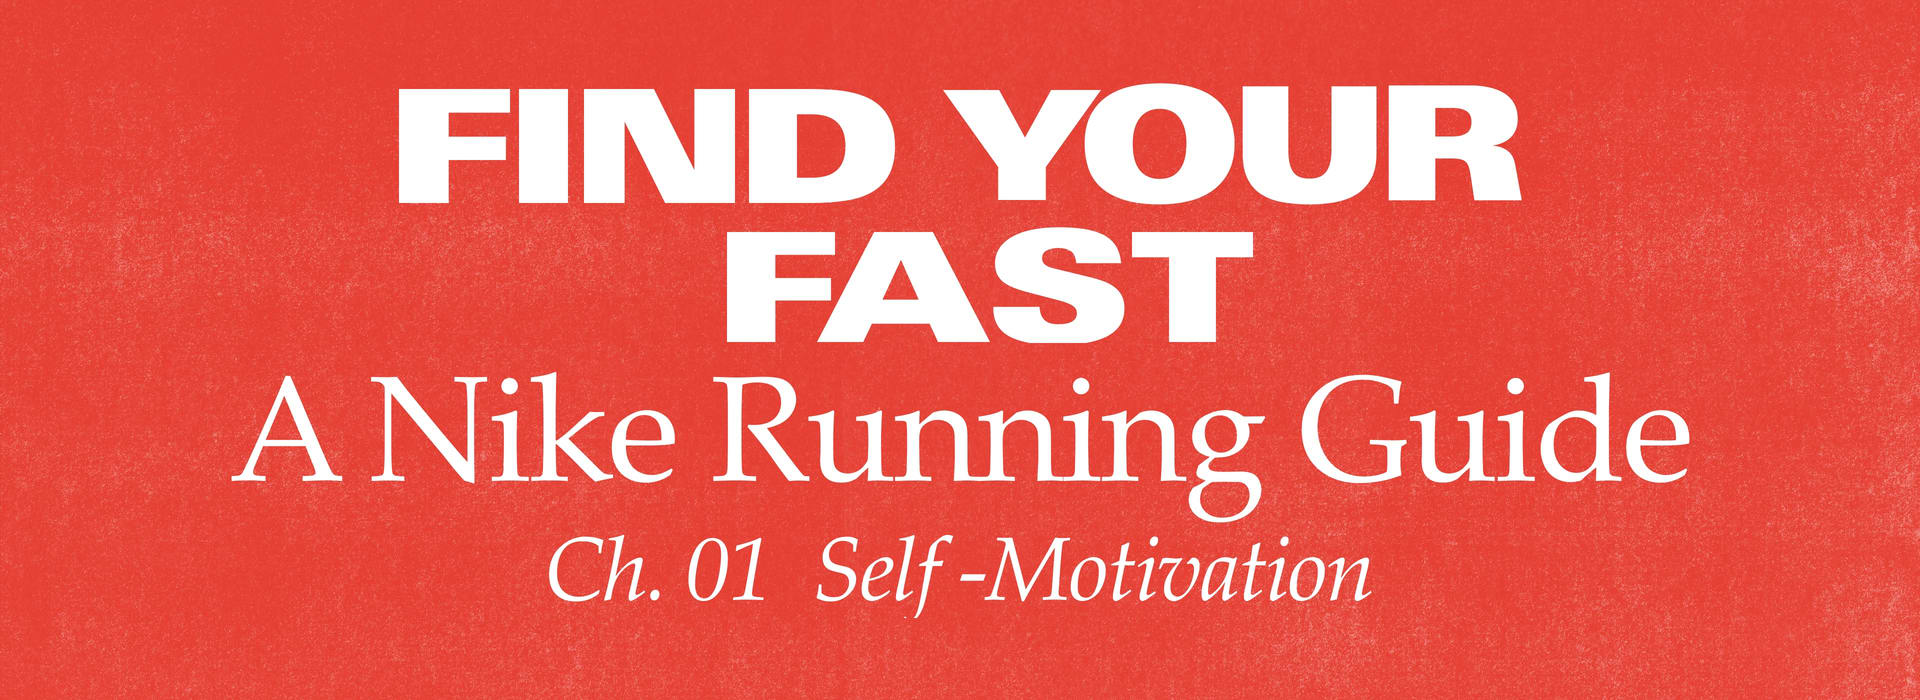 Guia Tristemente querido Find Your Fast: Guía de running de Nike. Nike ES